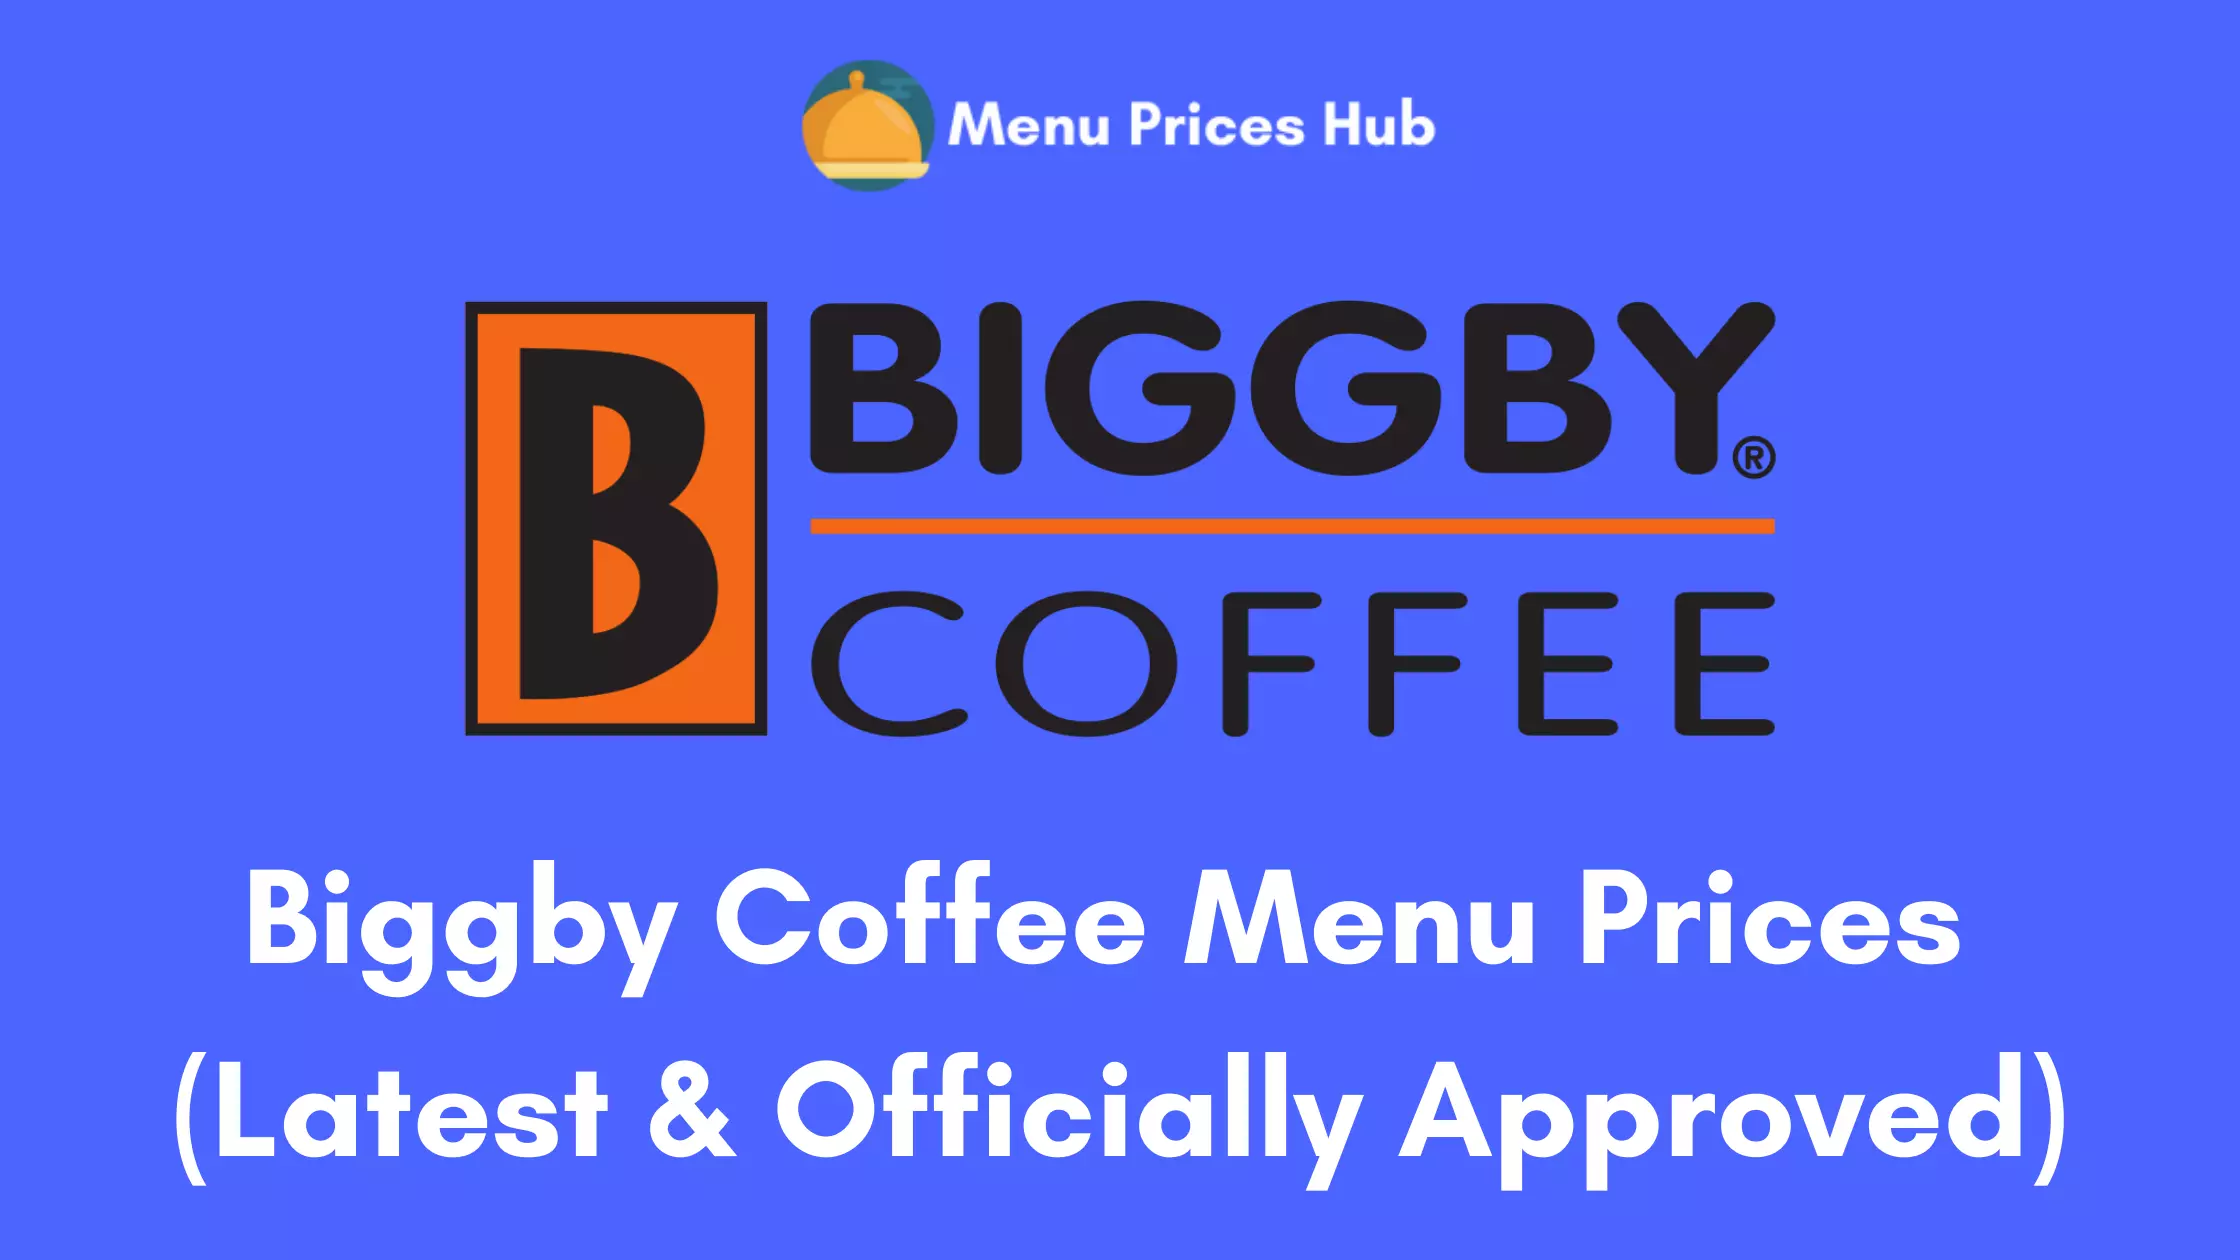 Biggby Coffee Menu Prices